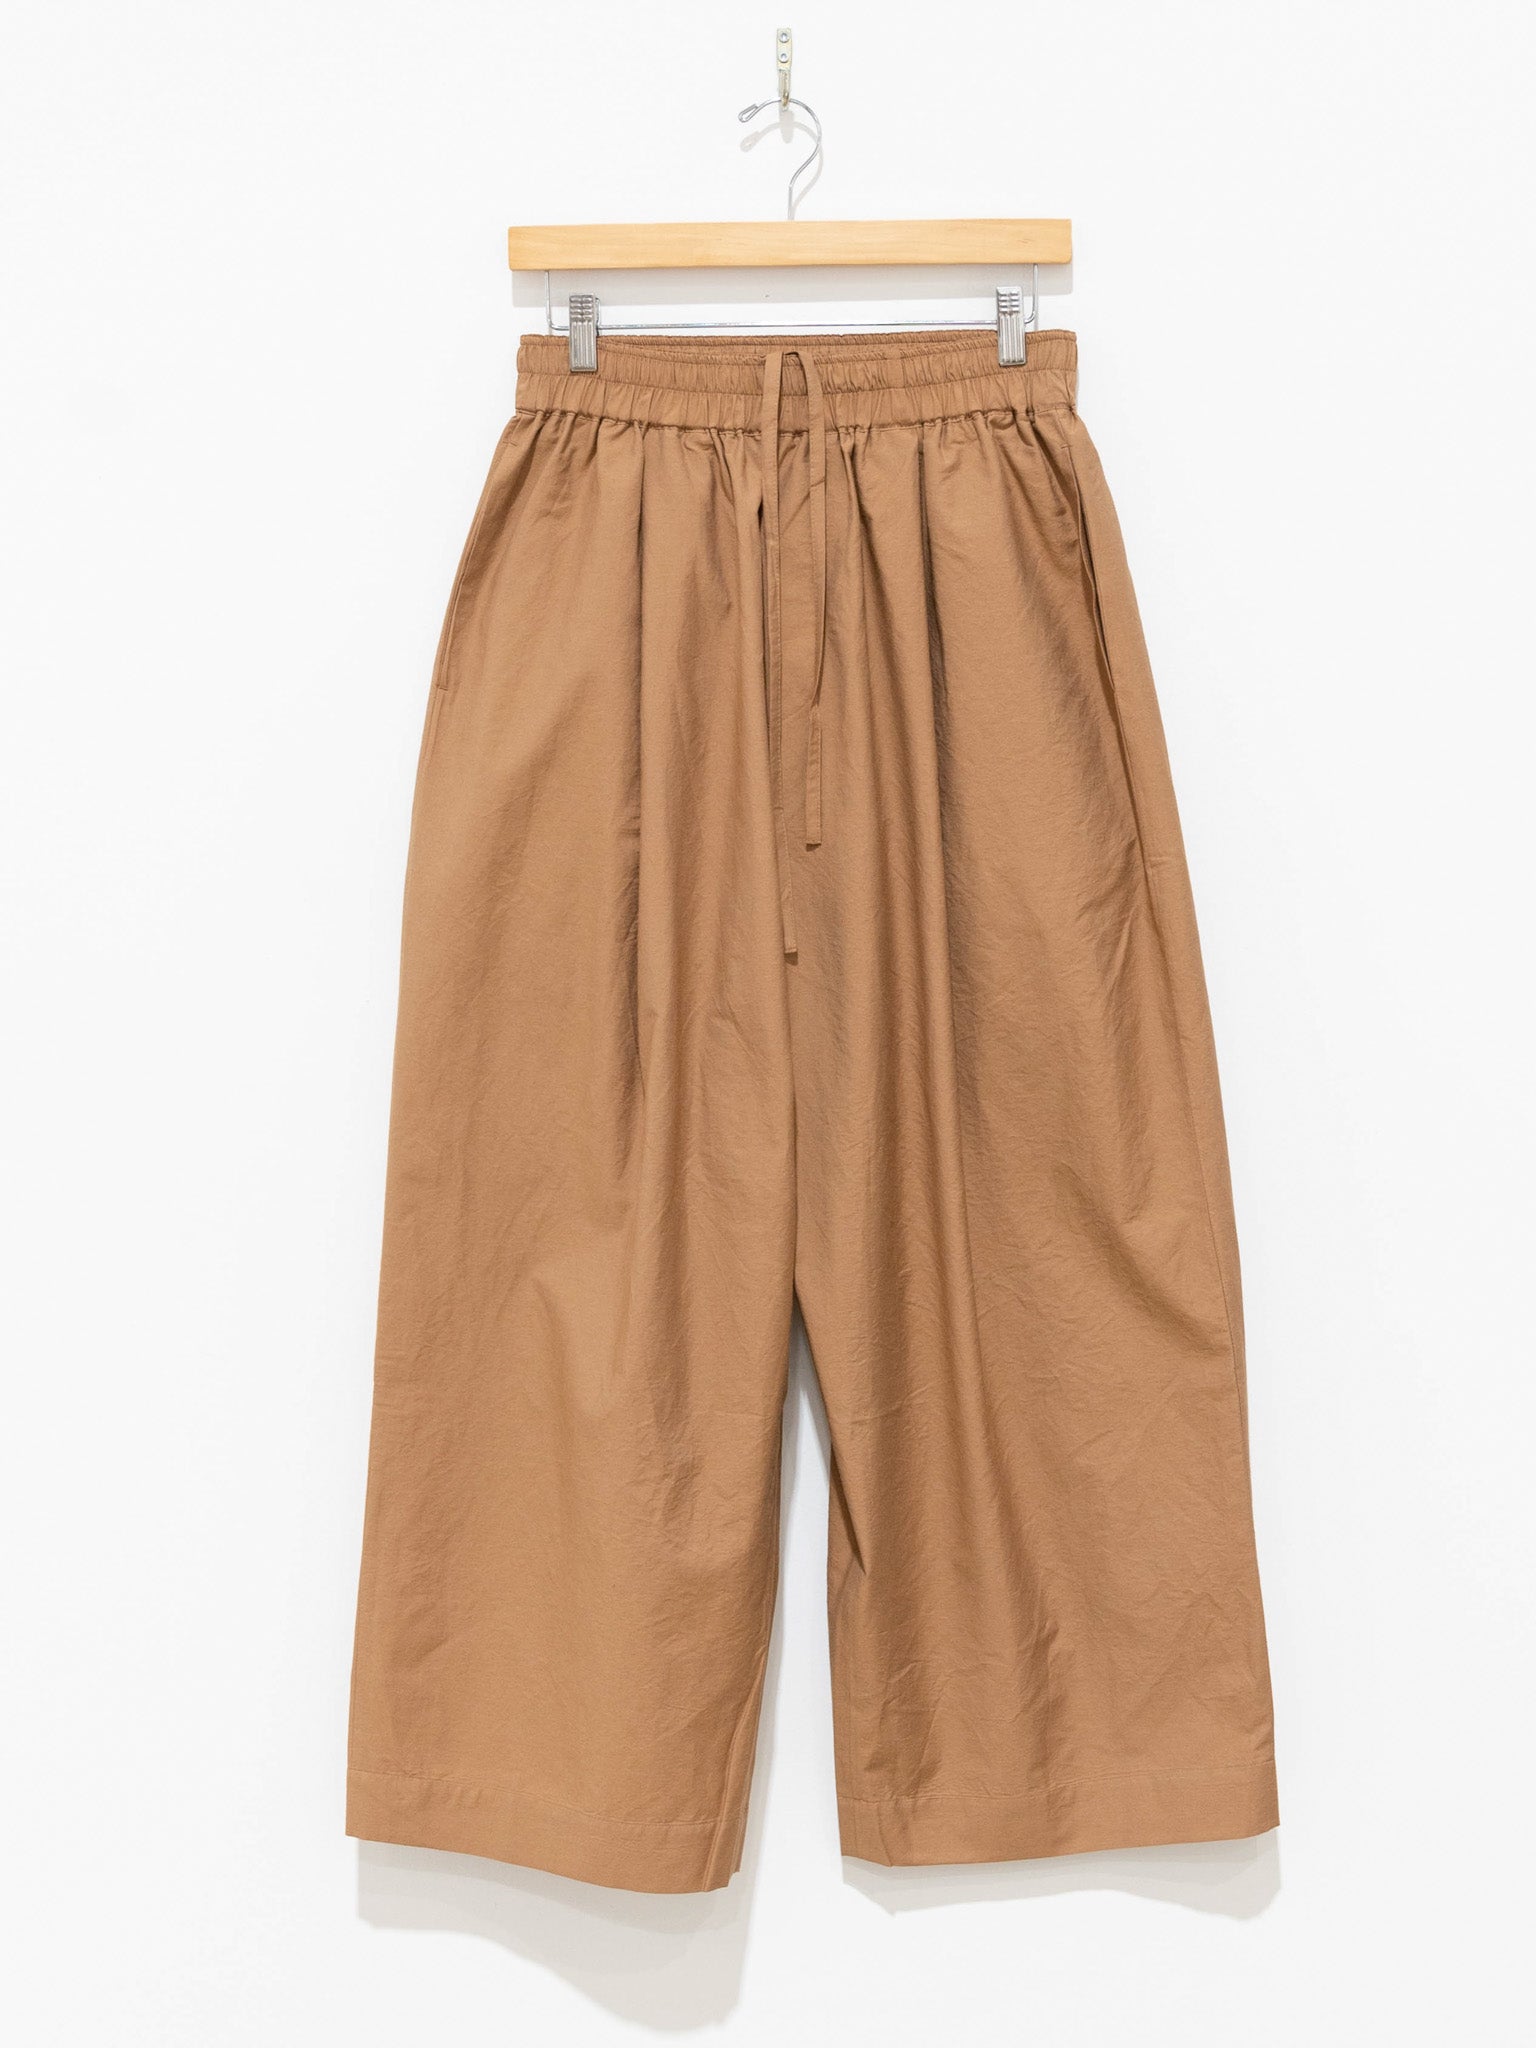 Namu Shop - Veritecoeur Shirring Easy Pants - Brown